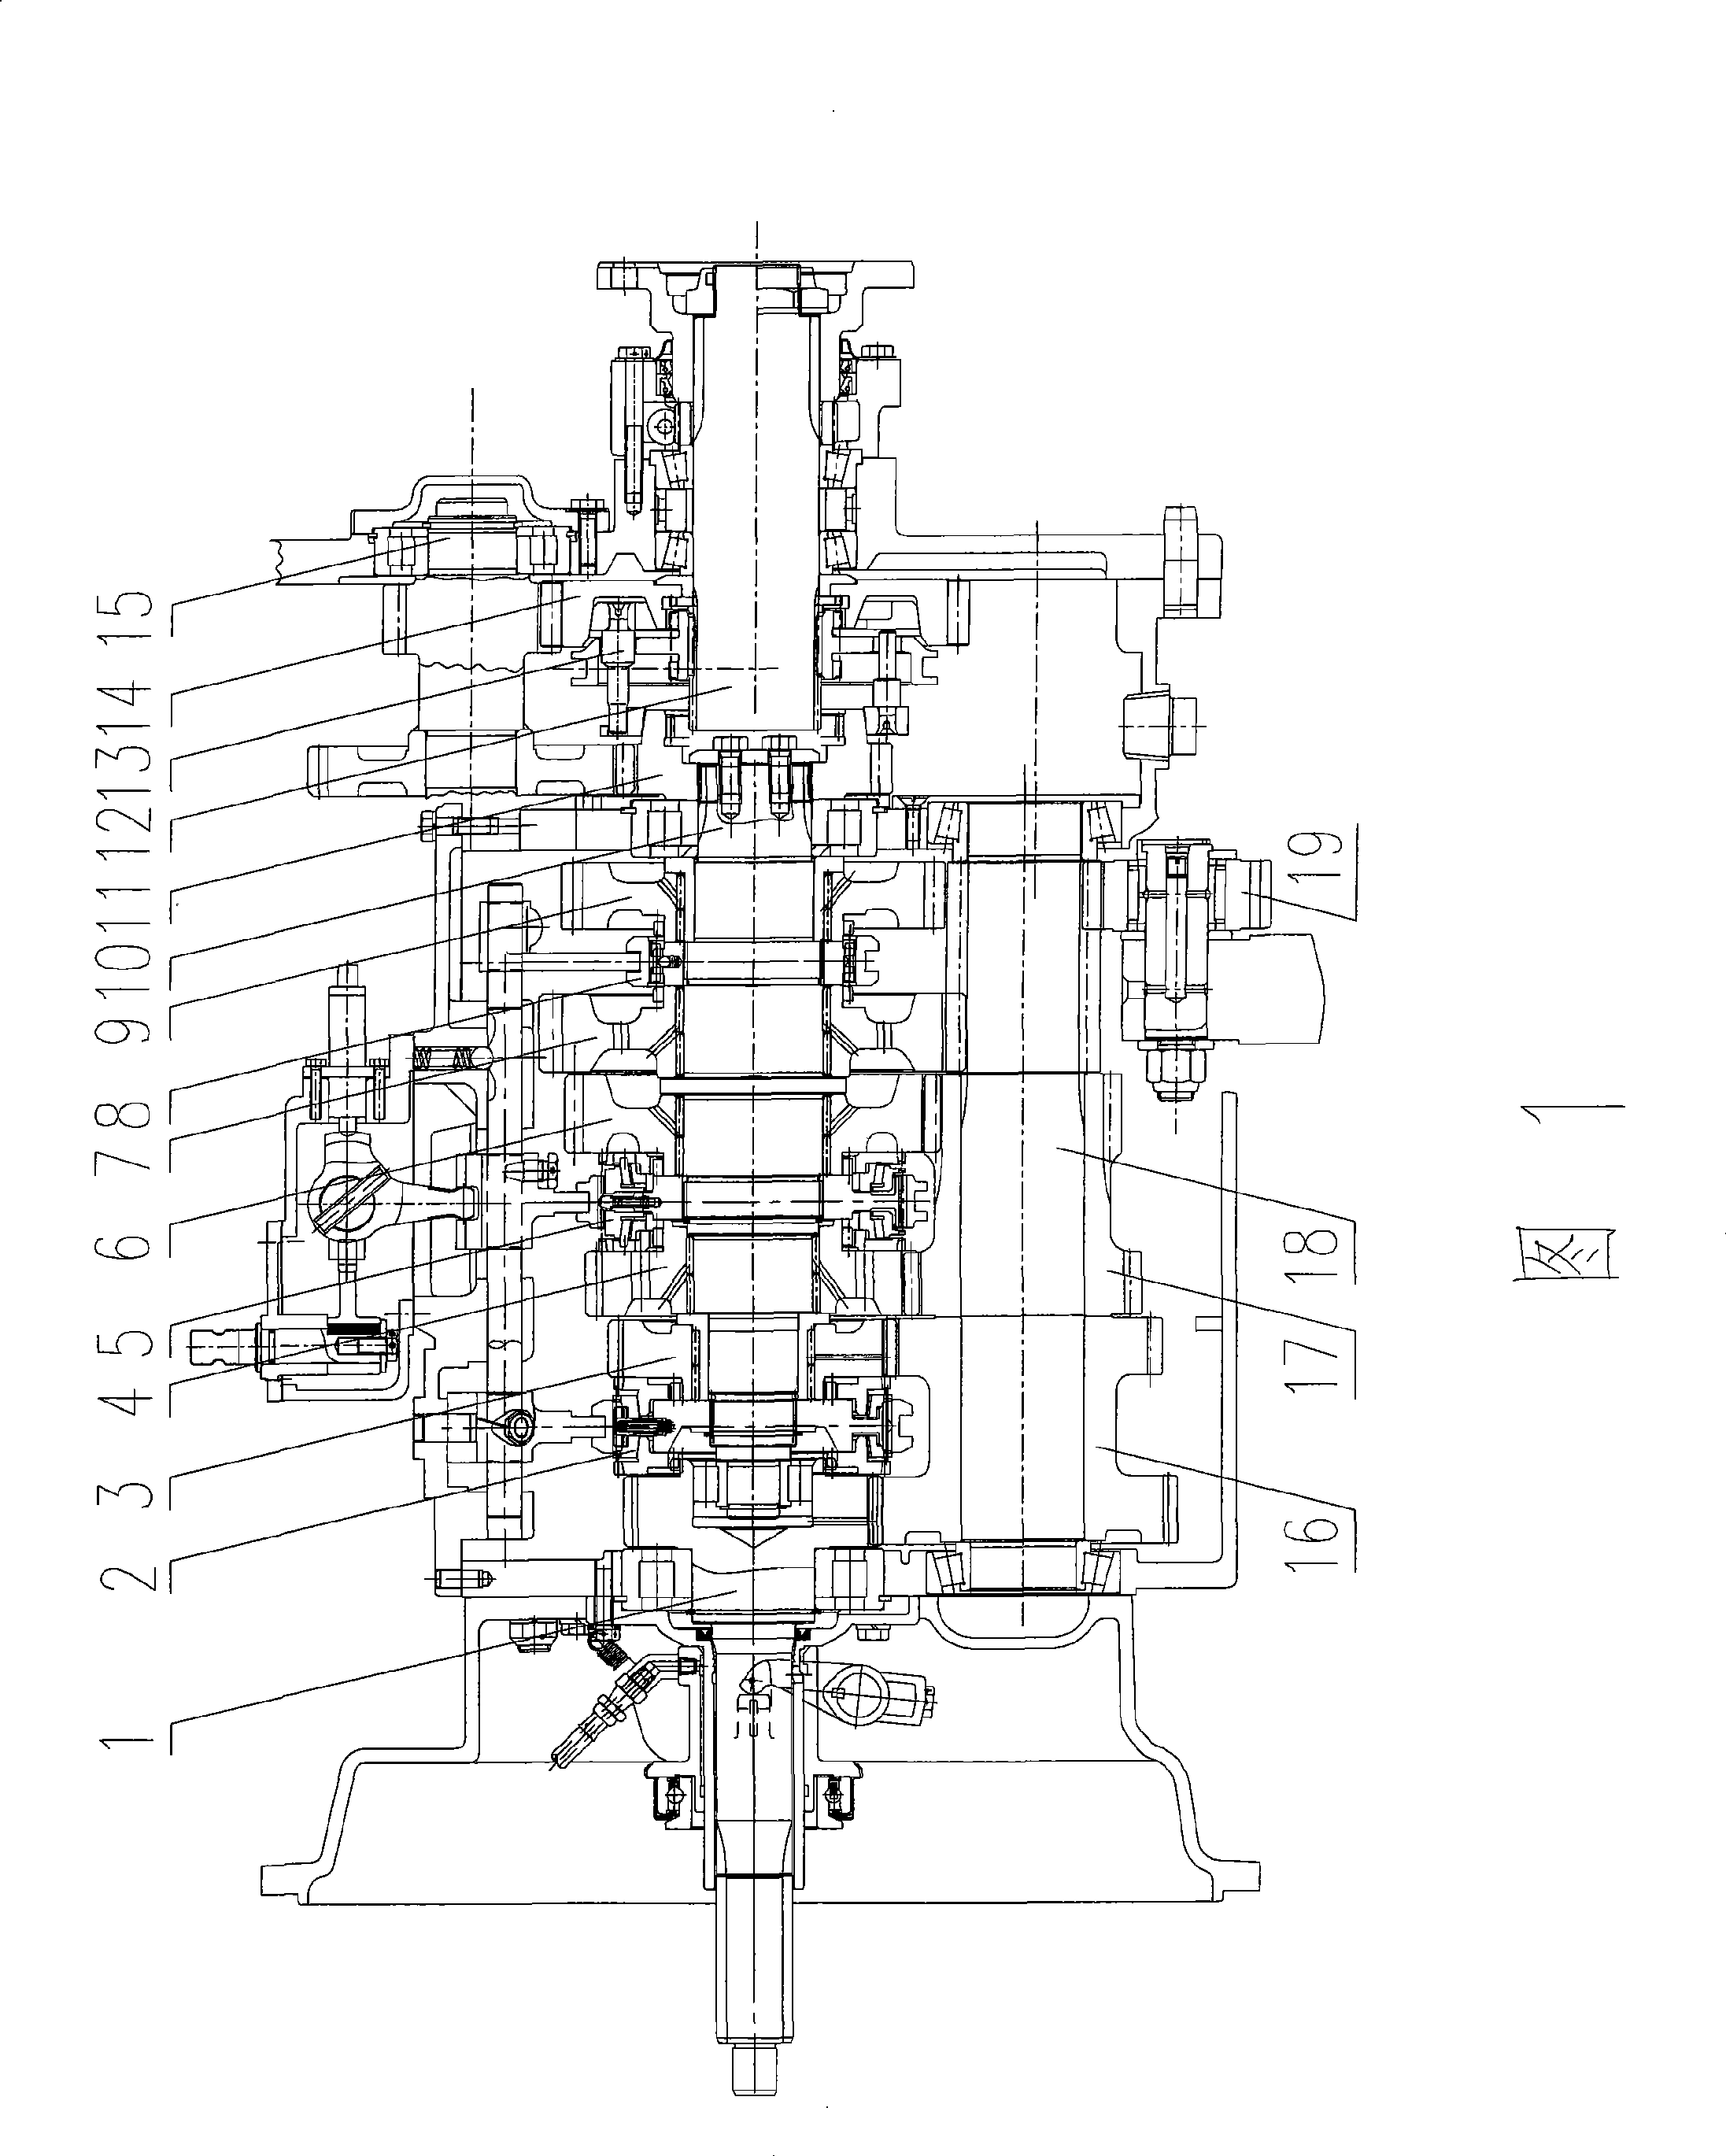 Automobile speed variator with main-sub case sub shaft of antisymmetric arrangement